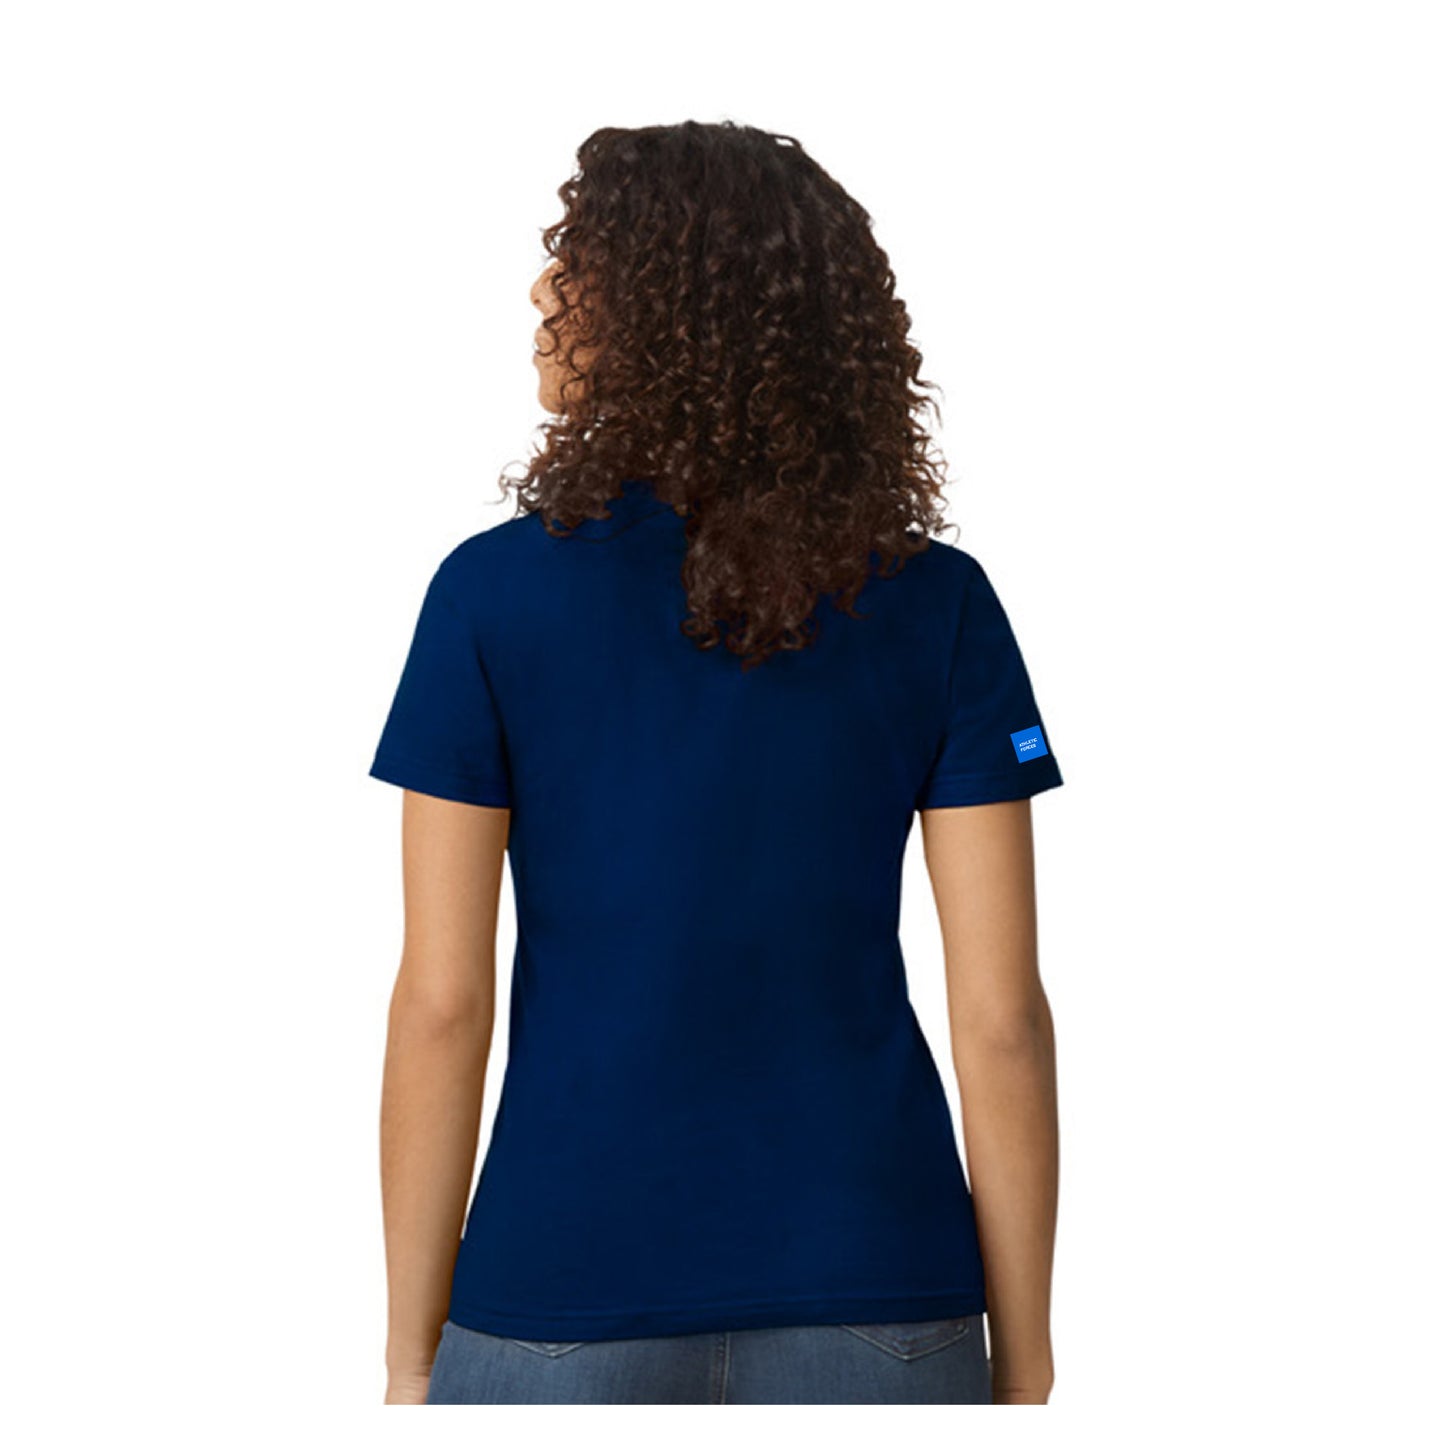 Marine Force ® Apex Cotton T-Shirt